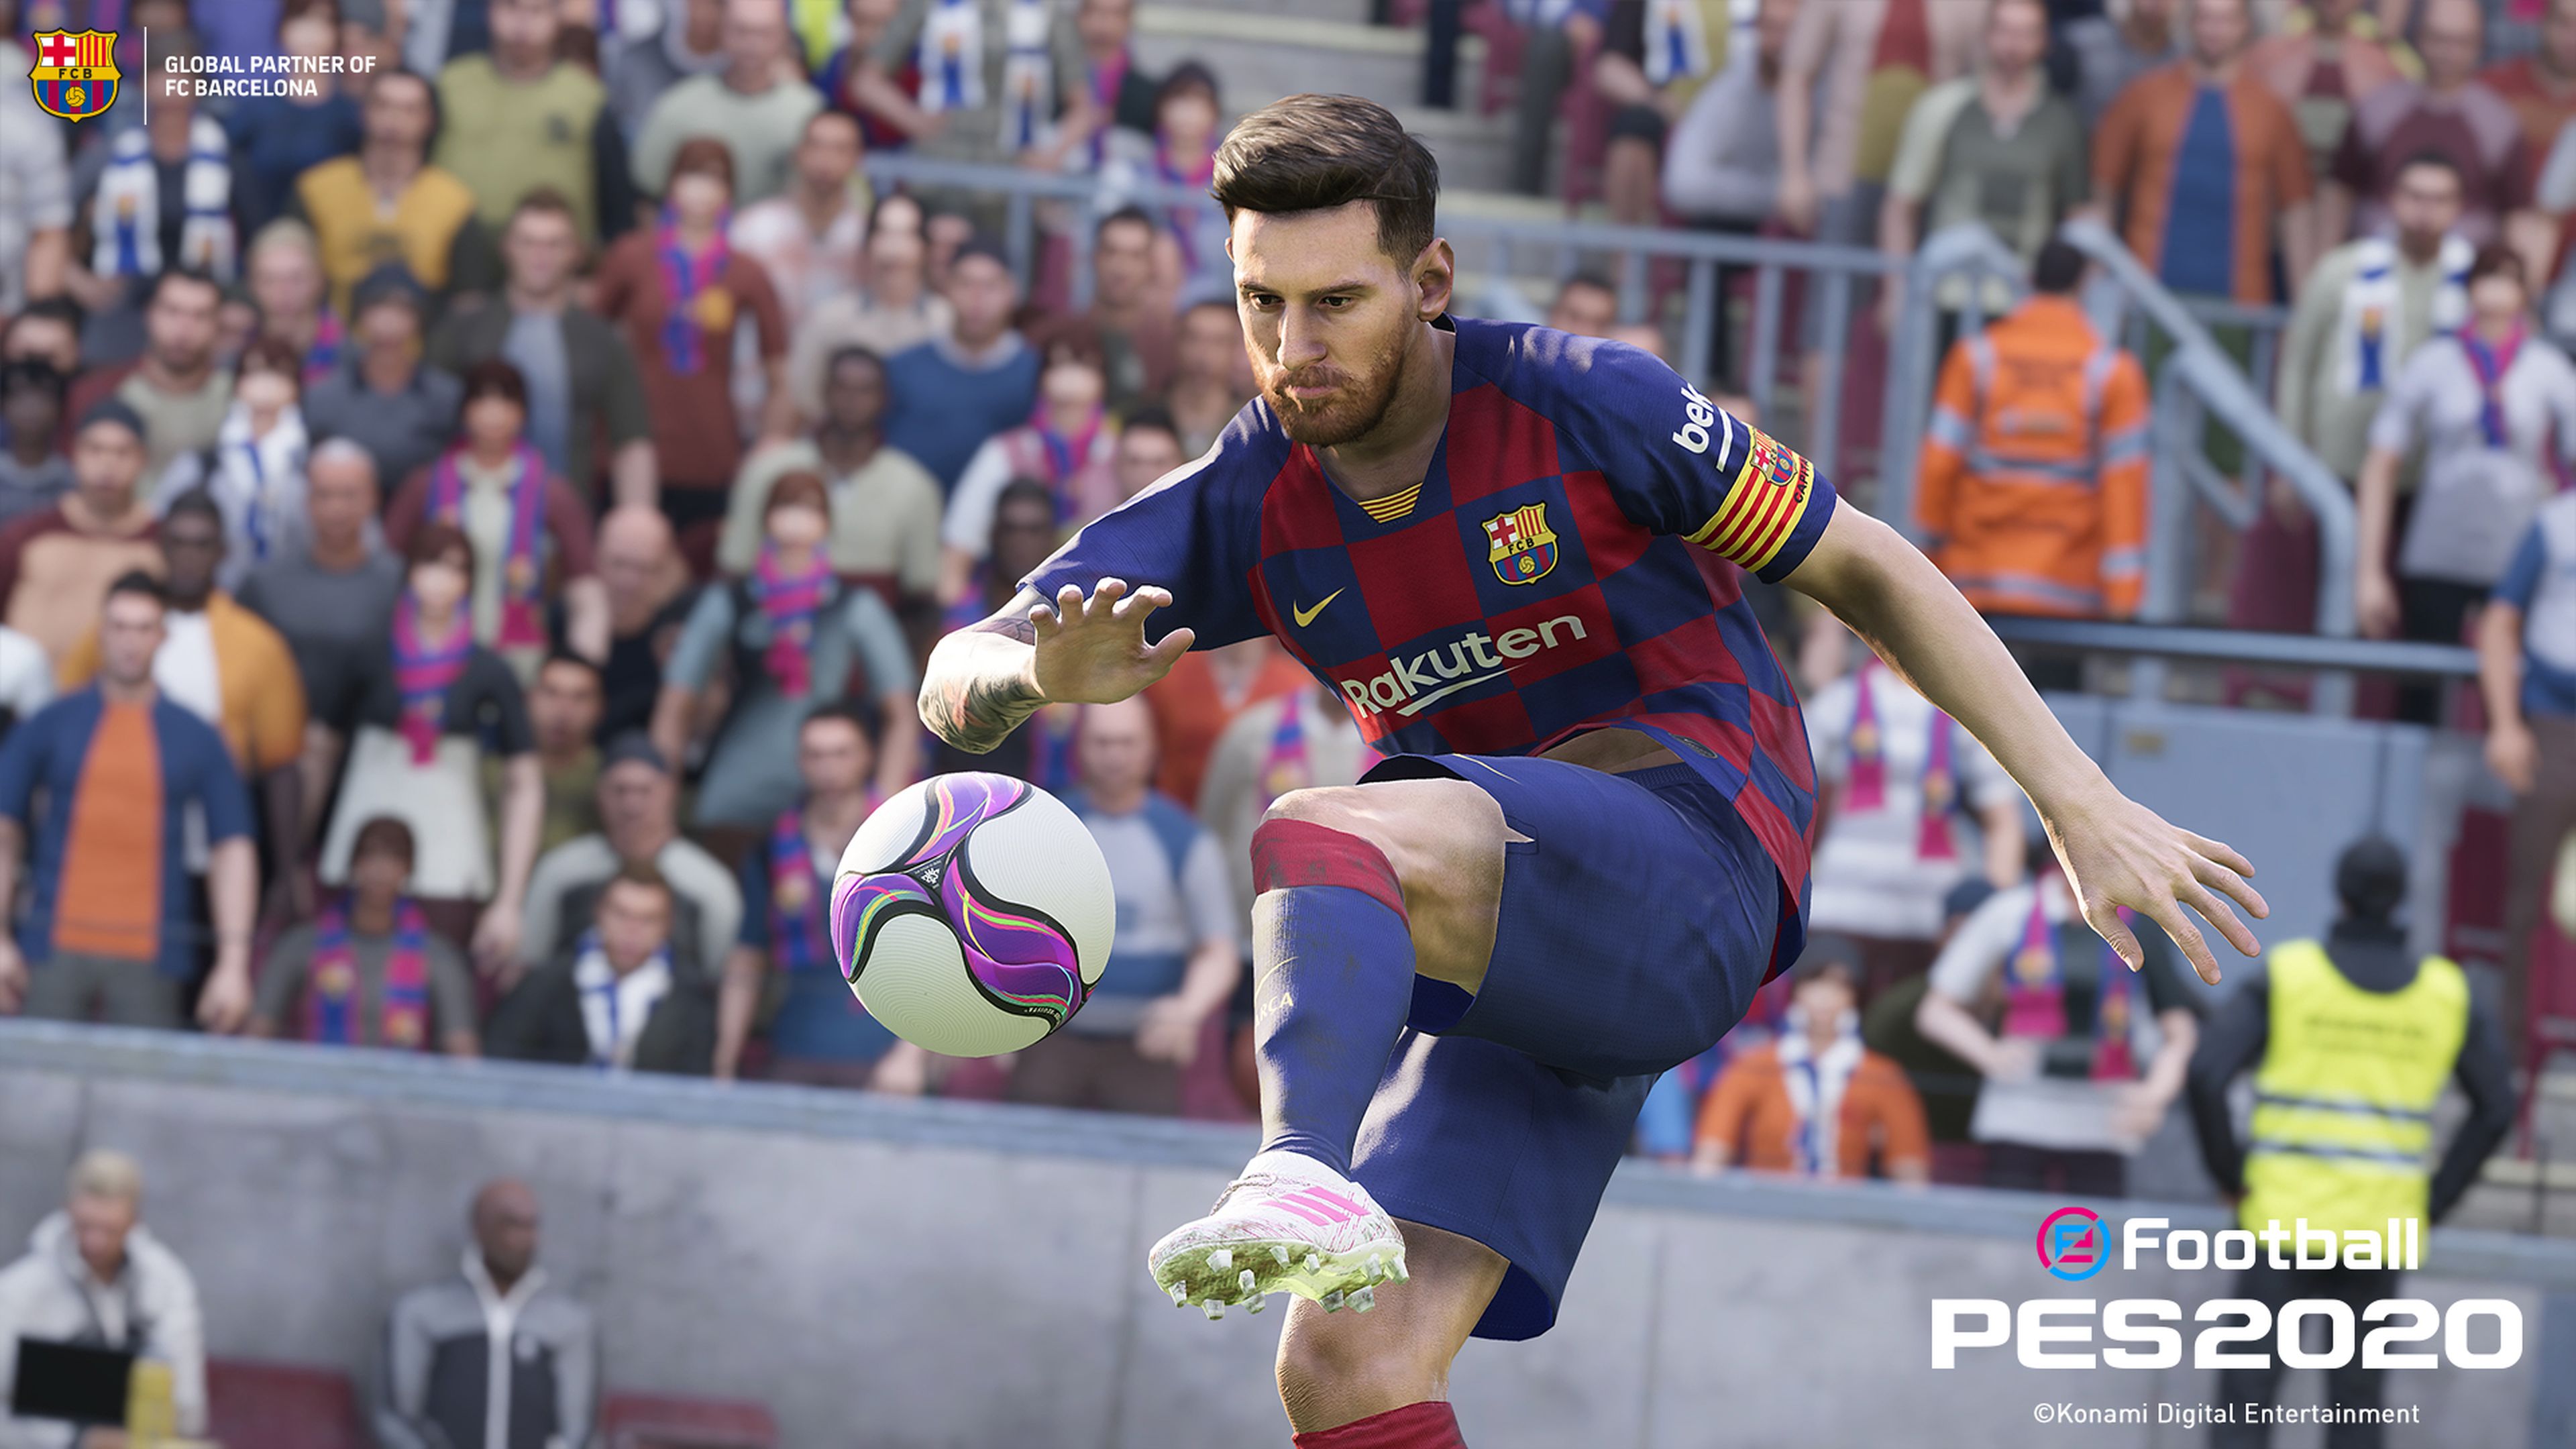 Avance de eFootball PES 2020 para PS4, Xbox One y PC